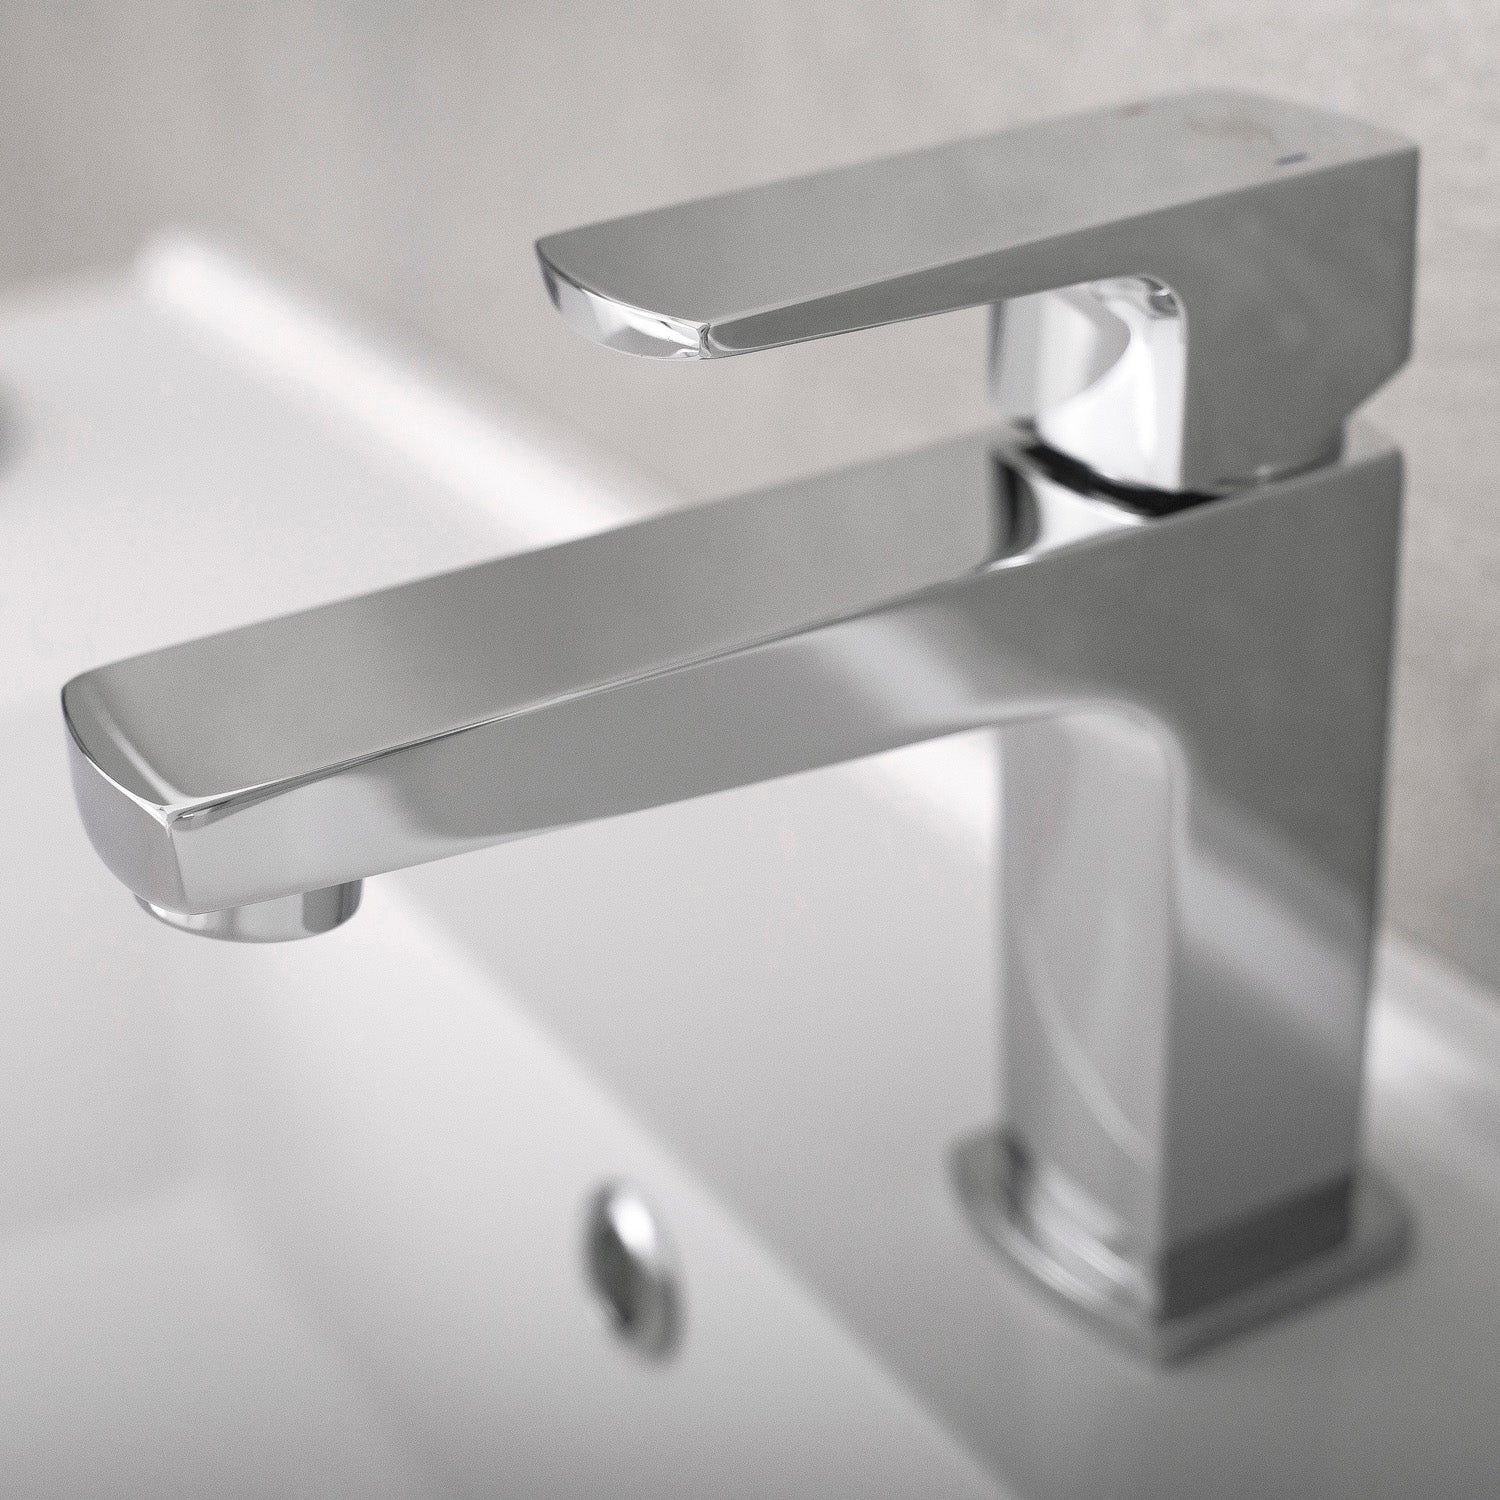 DAX Single Handle Bathroom Faucet, Brass Body, Chrome Finish, 4-3/4 x 5-11/16 Inches (DAX-8209)